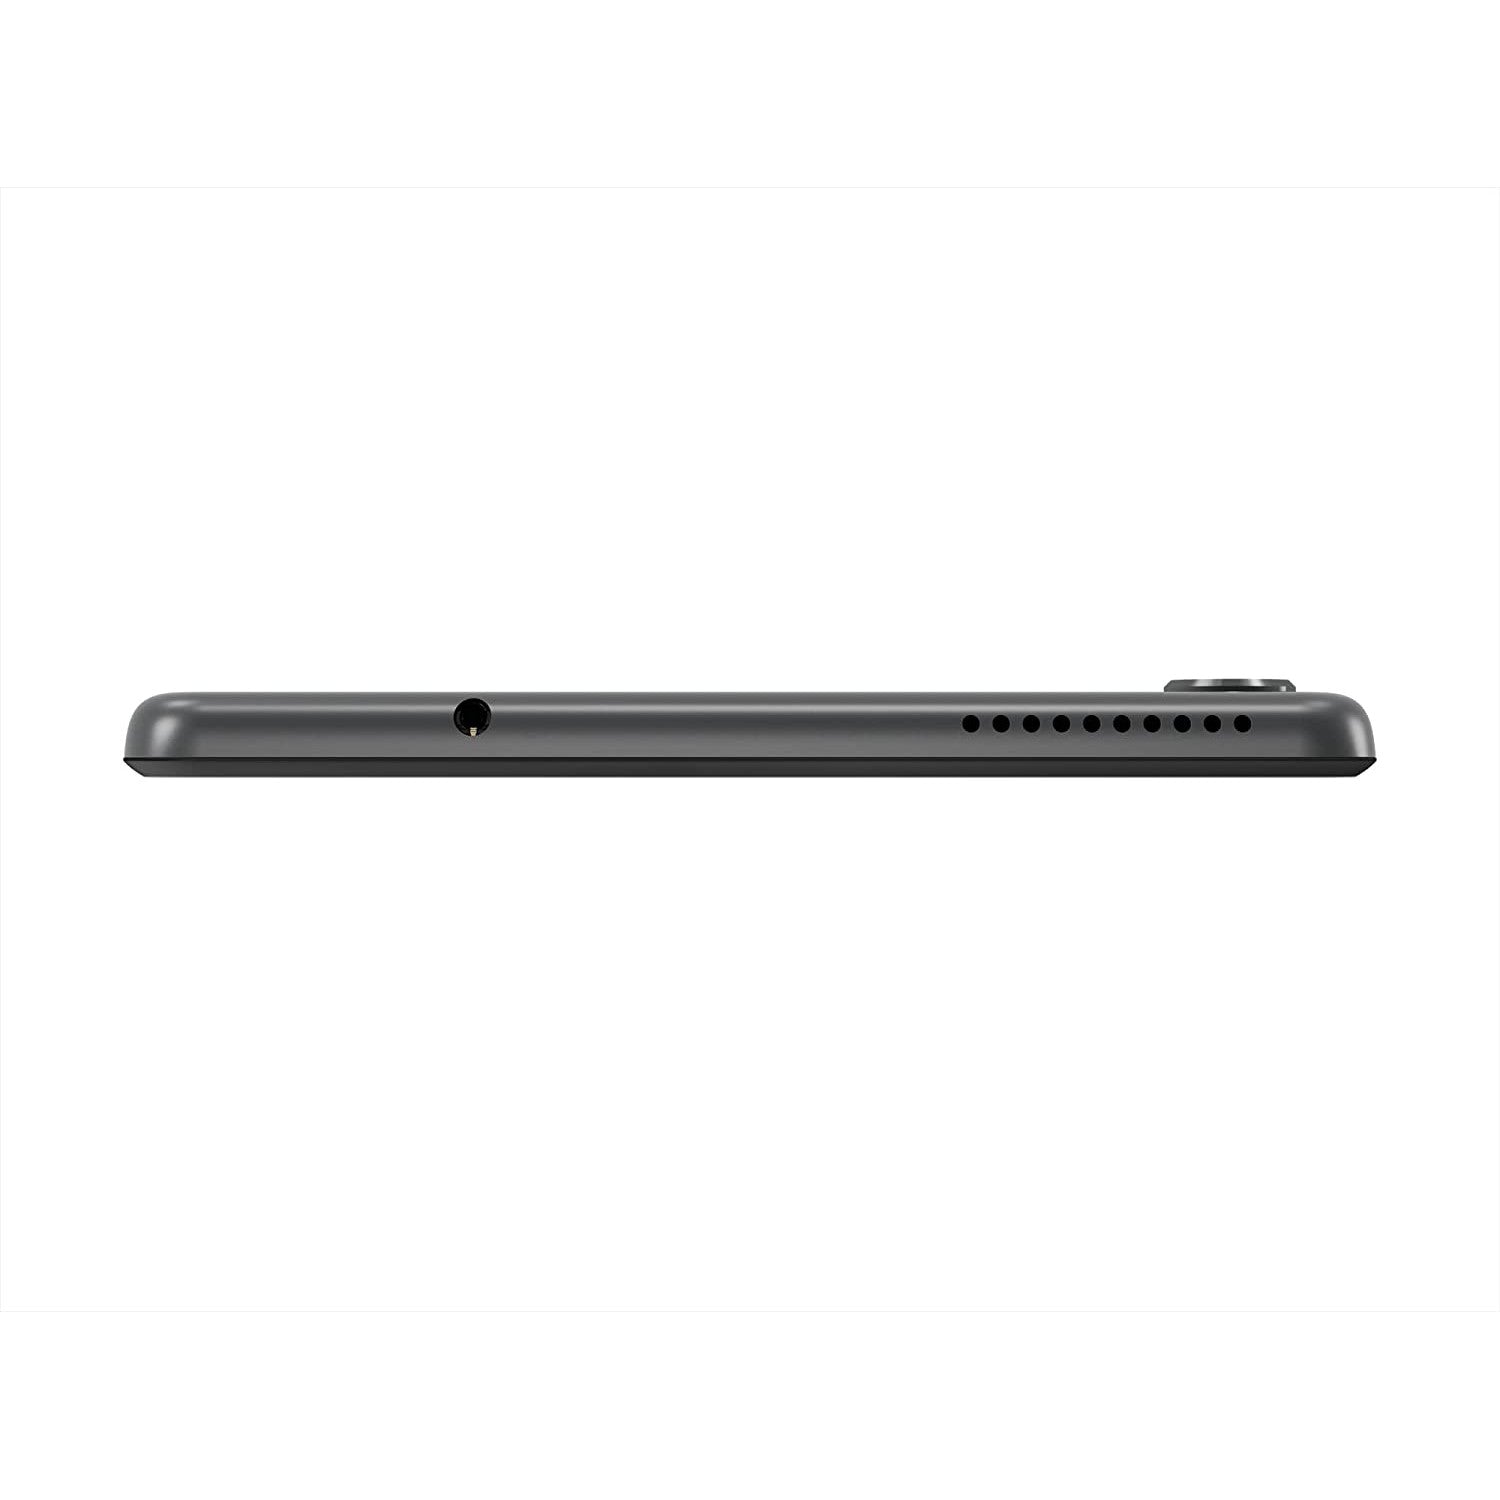 Lenovo Tab M8 2nd Gen, 16GB - Iron Grey - Refurbished Fair